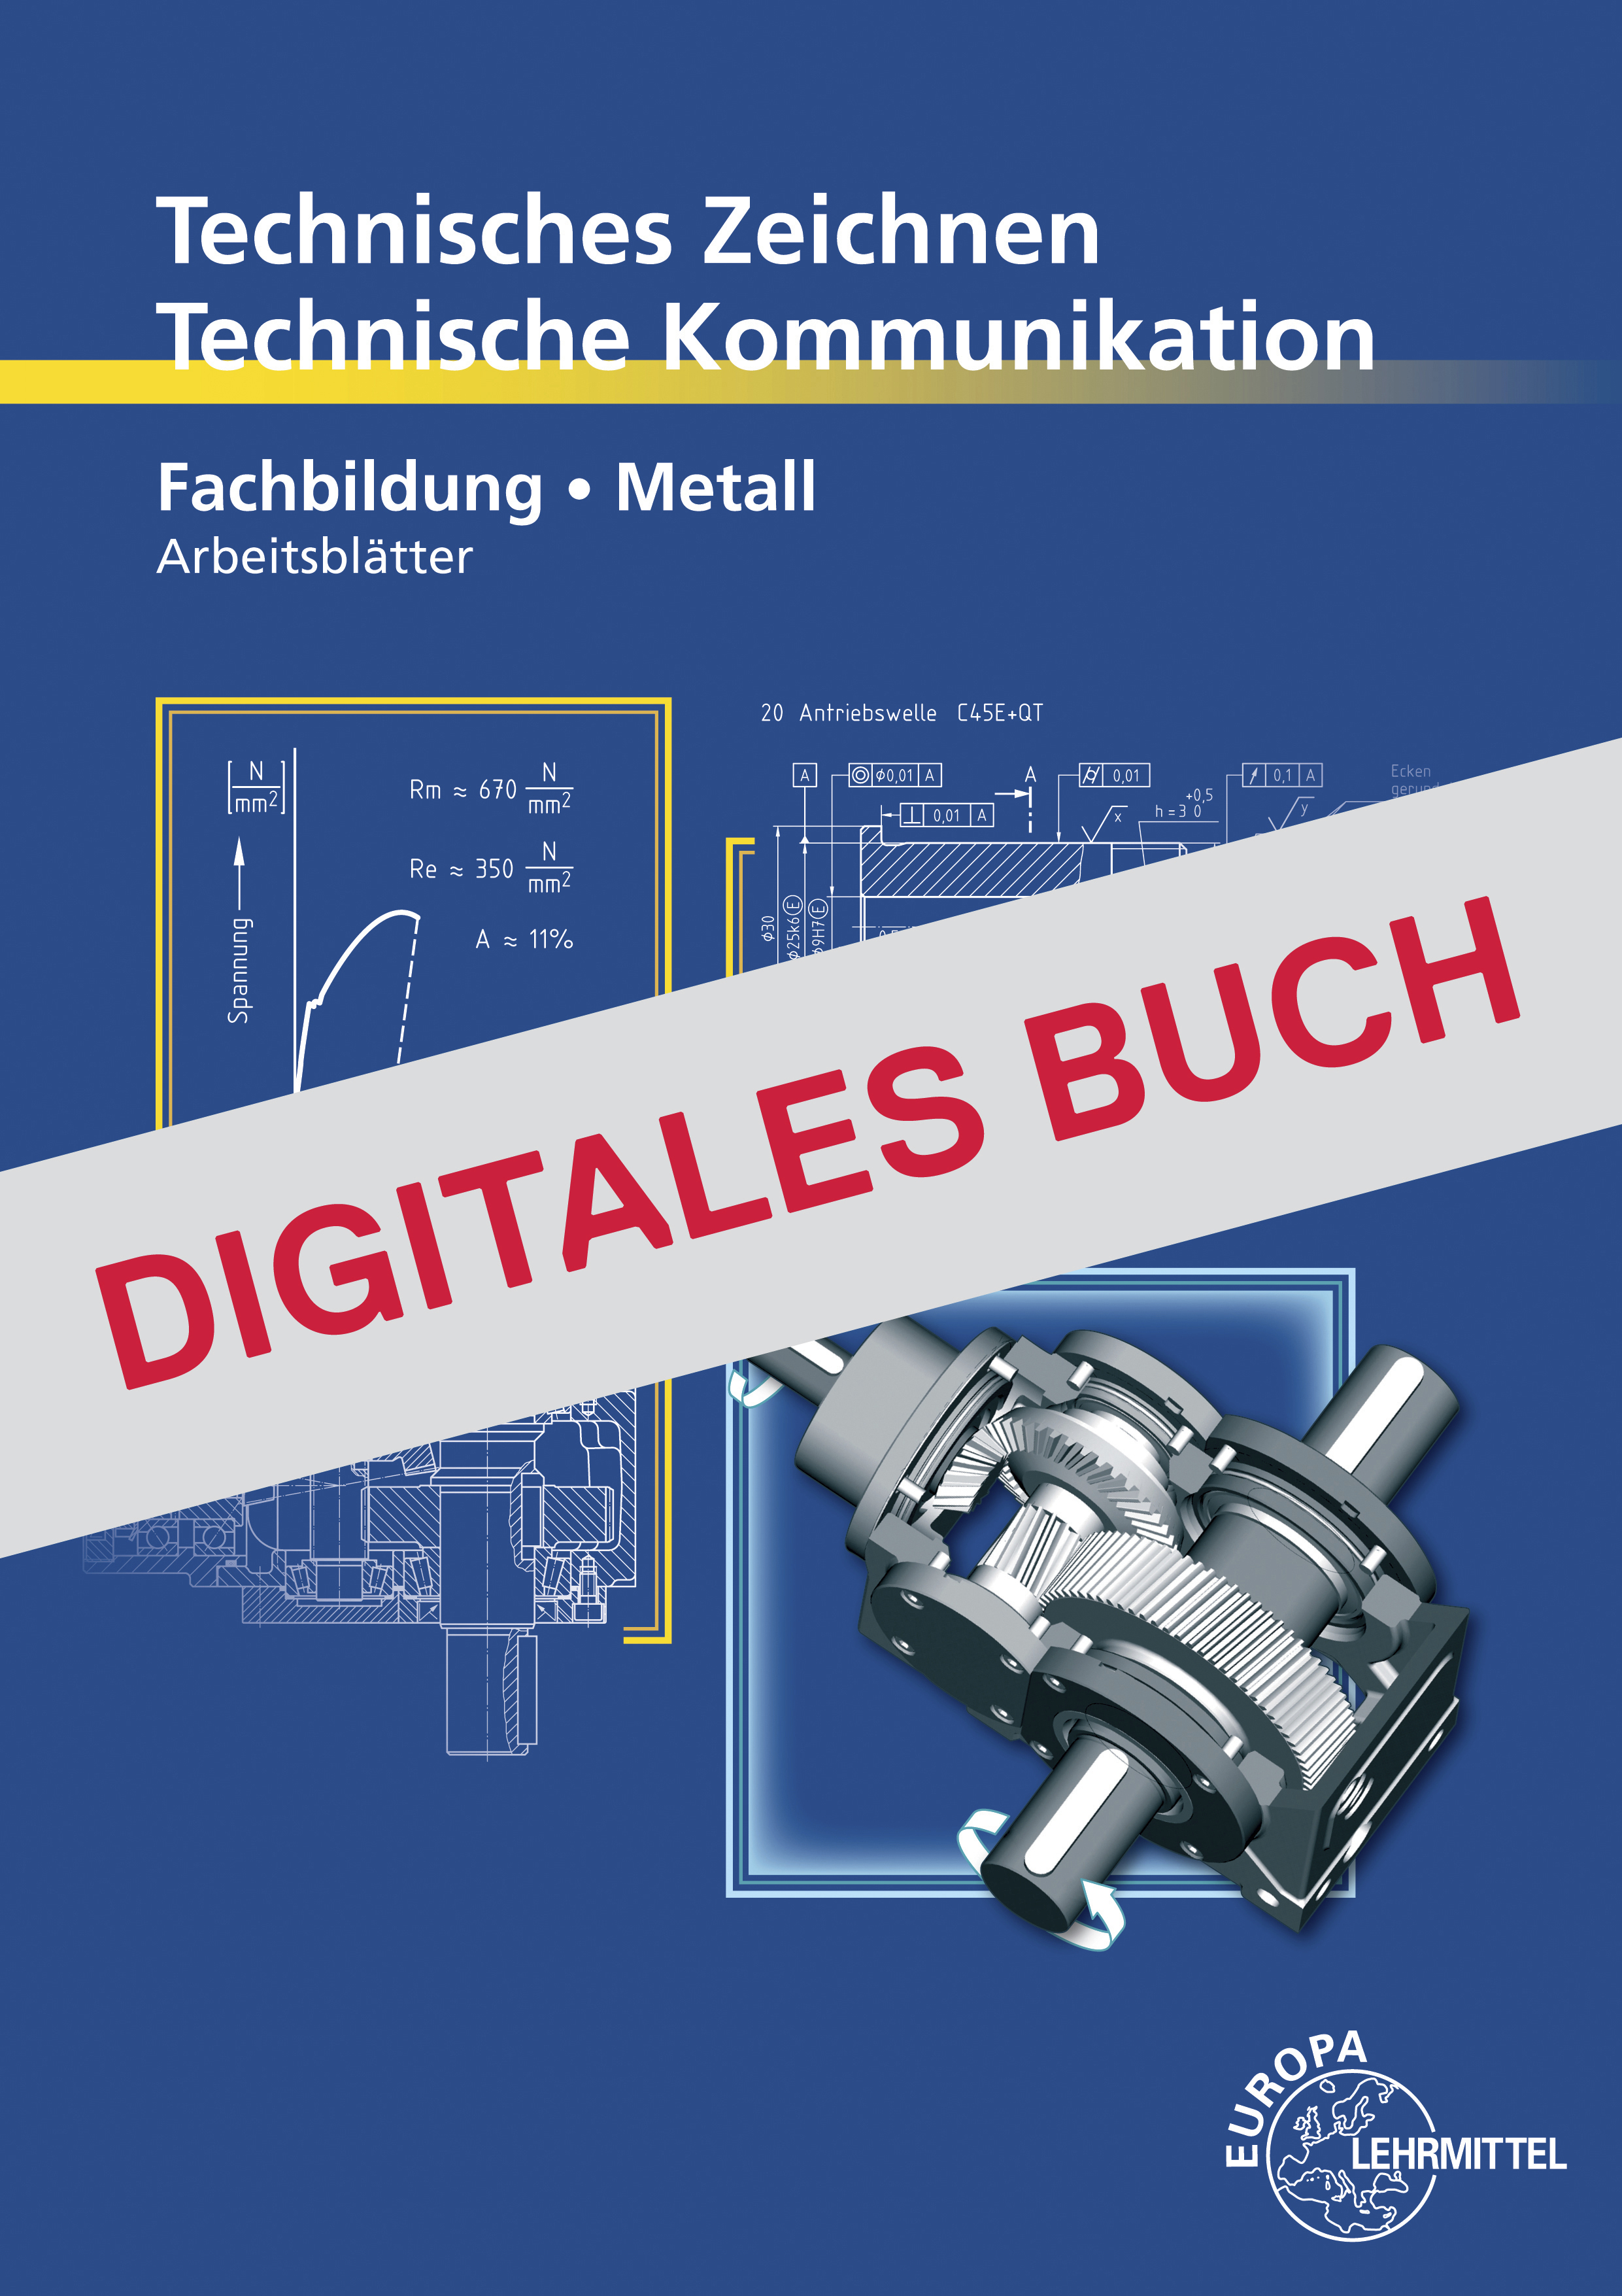 Technische Kommunikation Metall Fachbildung -  Arbeitsblätter - Digitales Buch